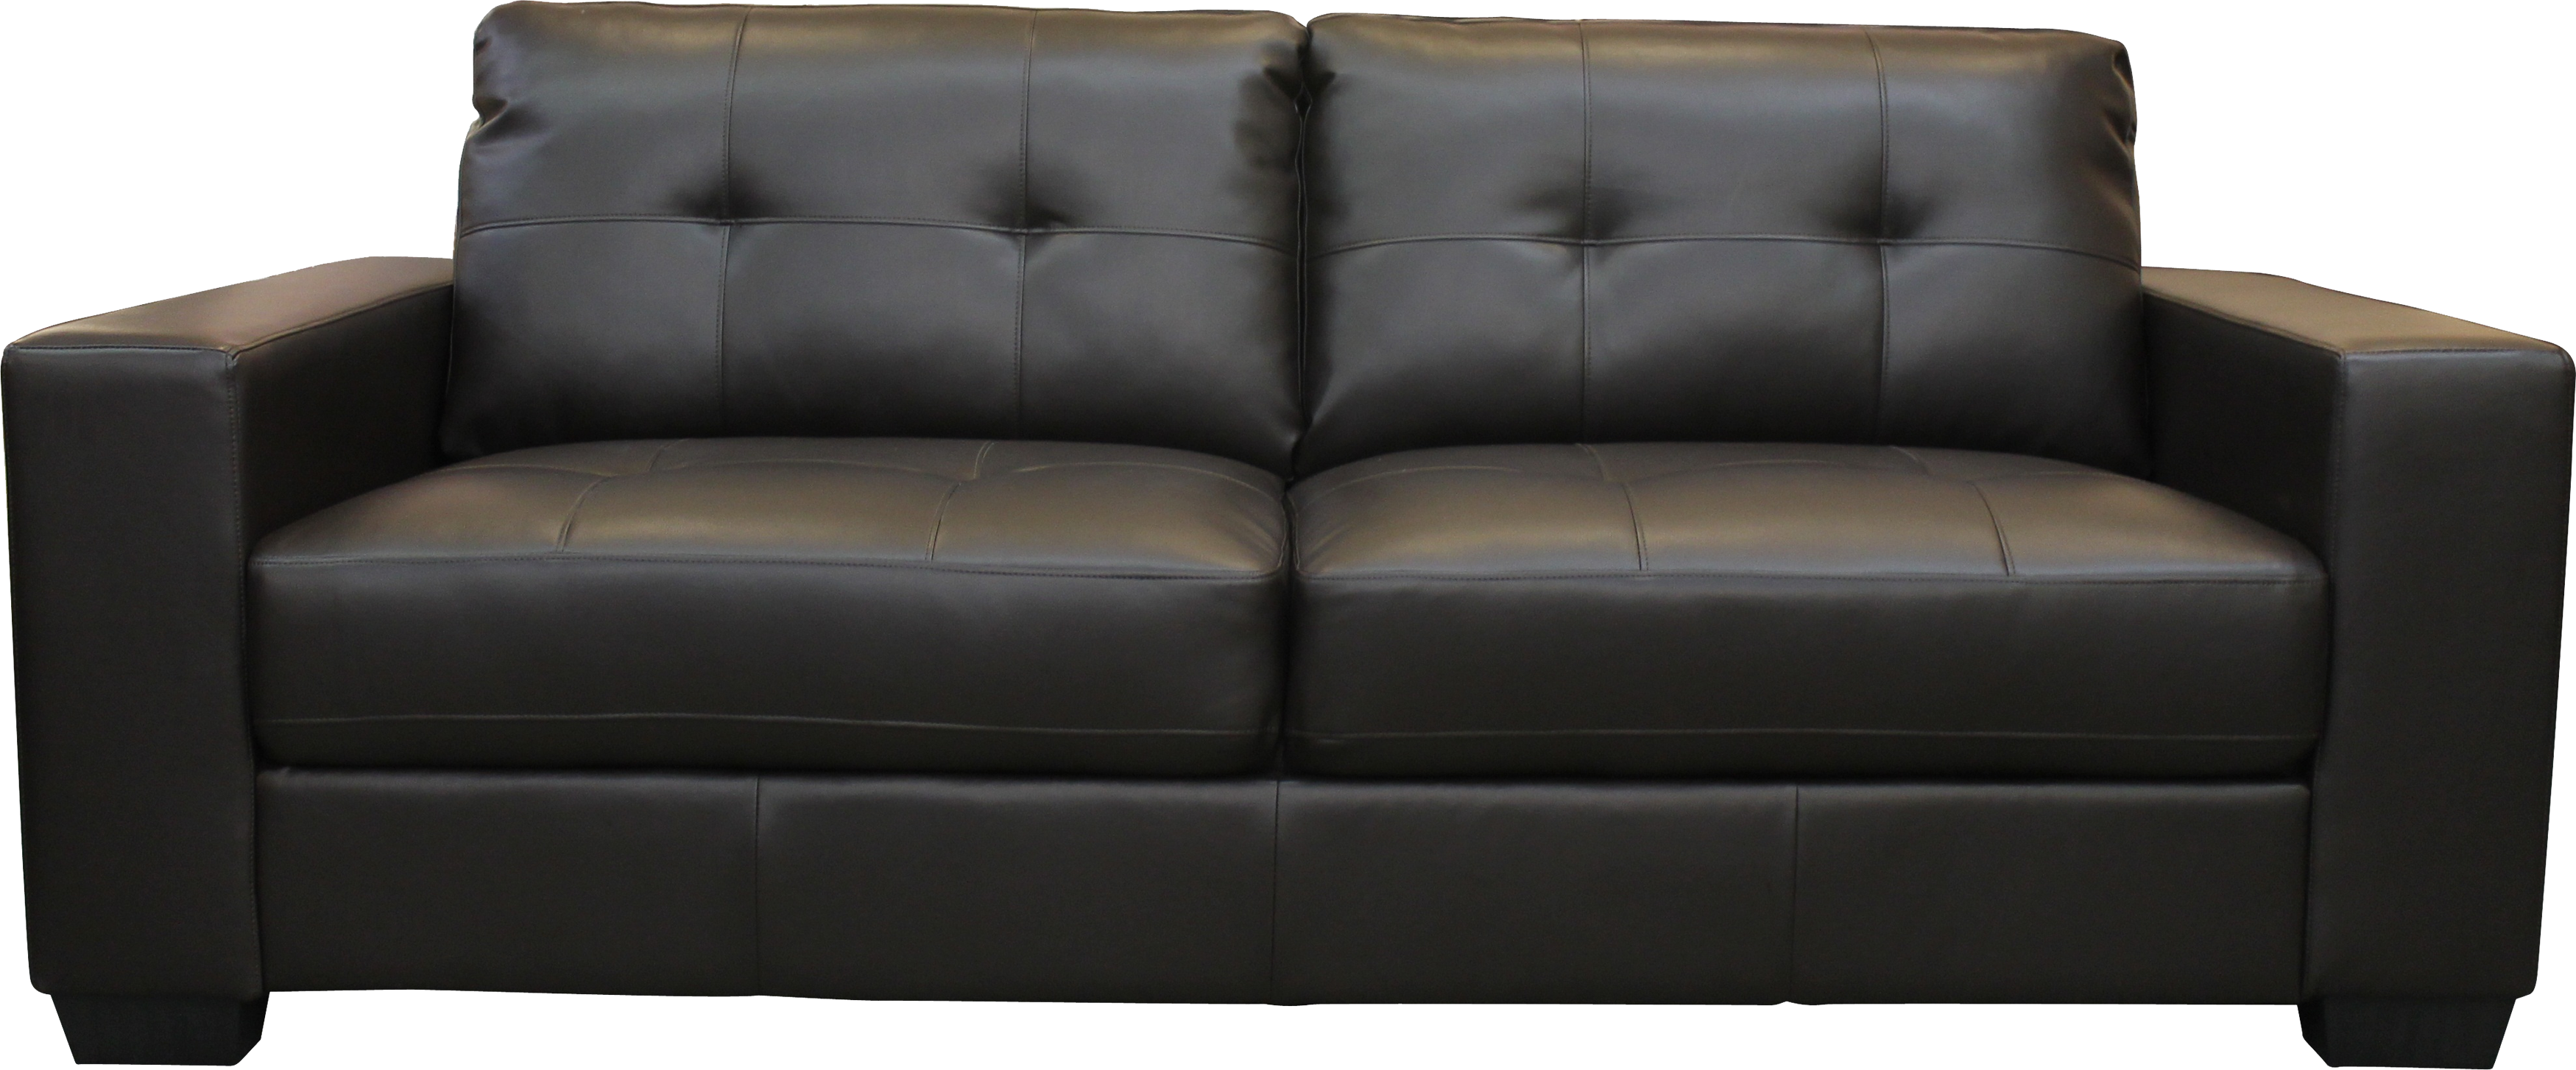 Sofa chaise longue Pic Pic